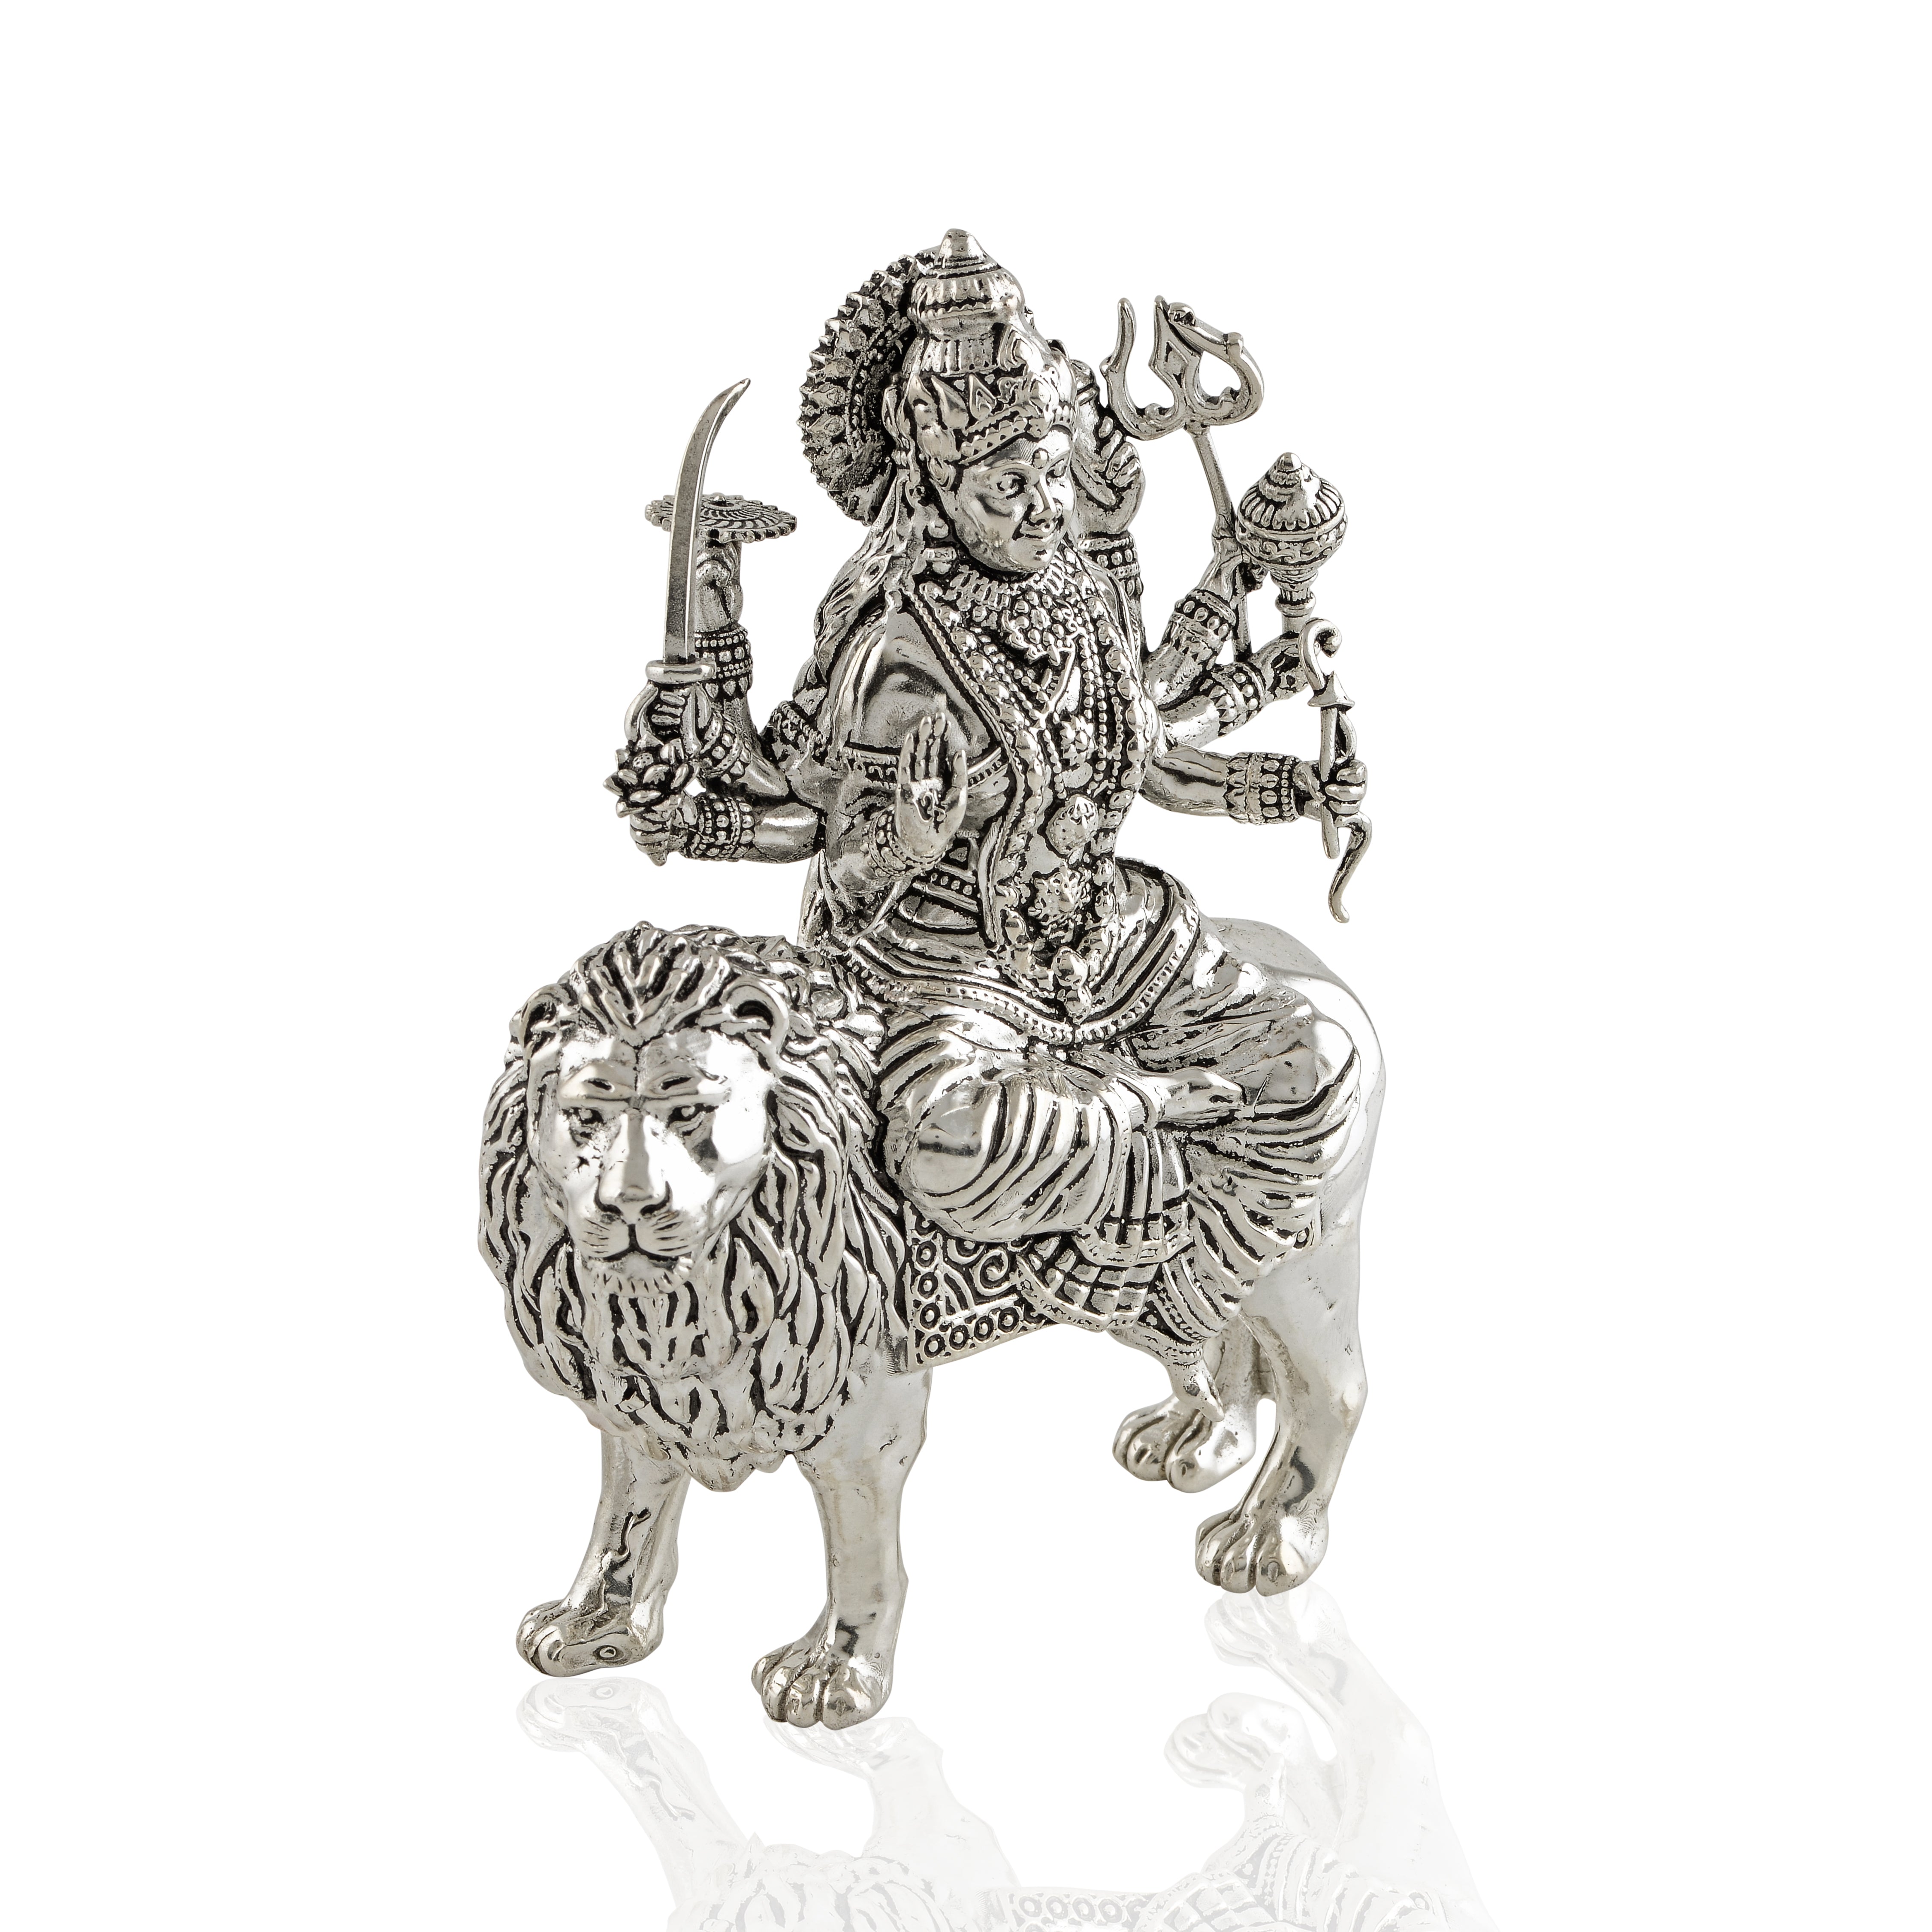 Goddess Durga Idol In Silver